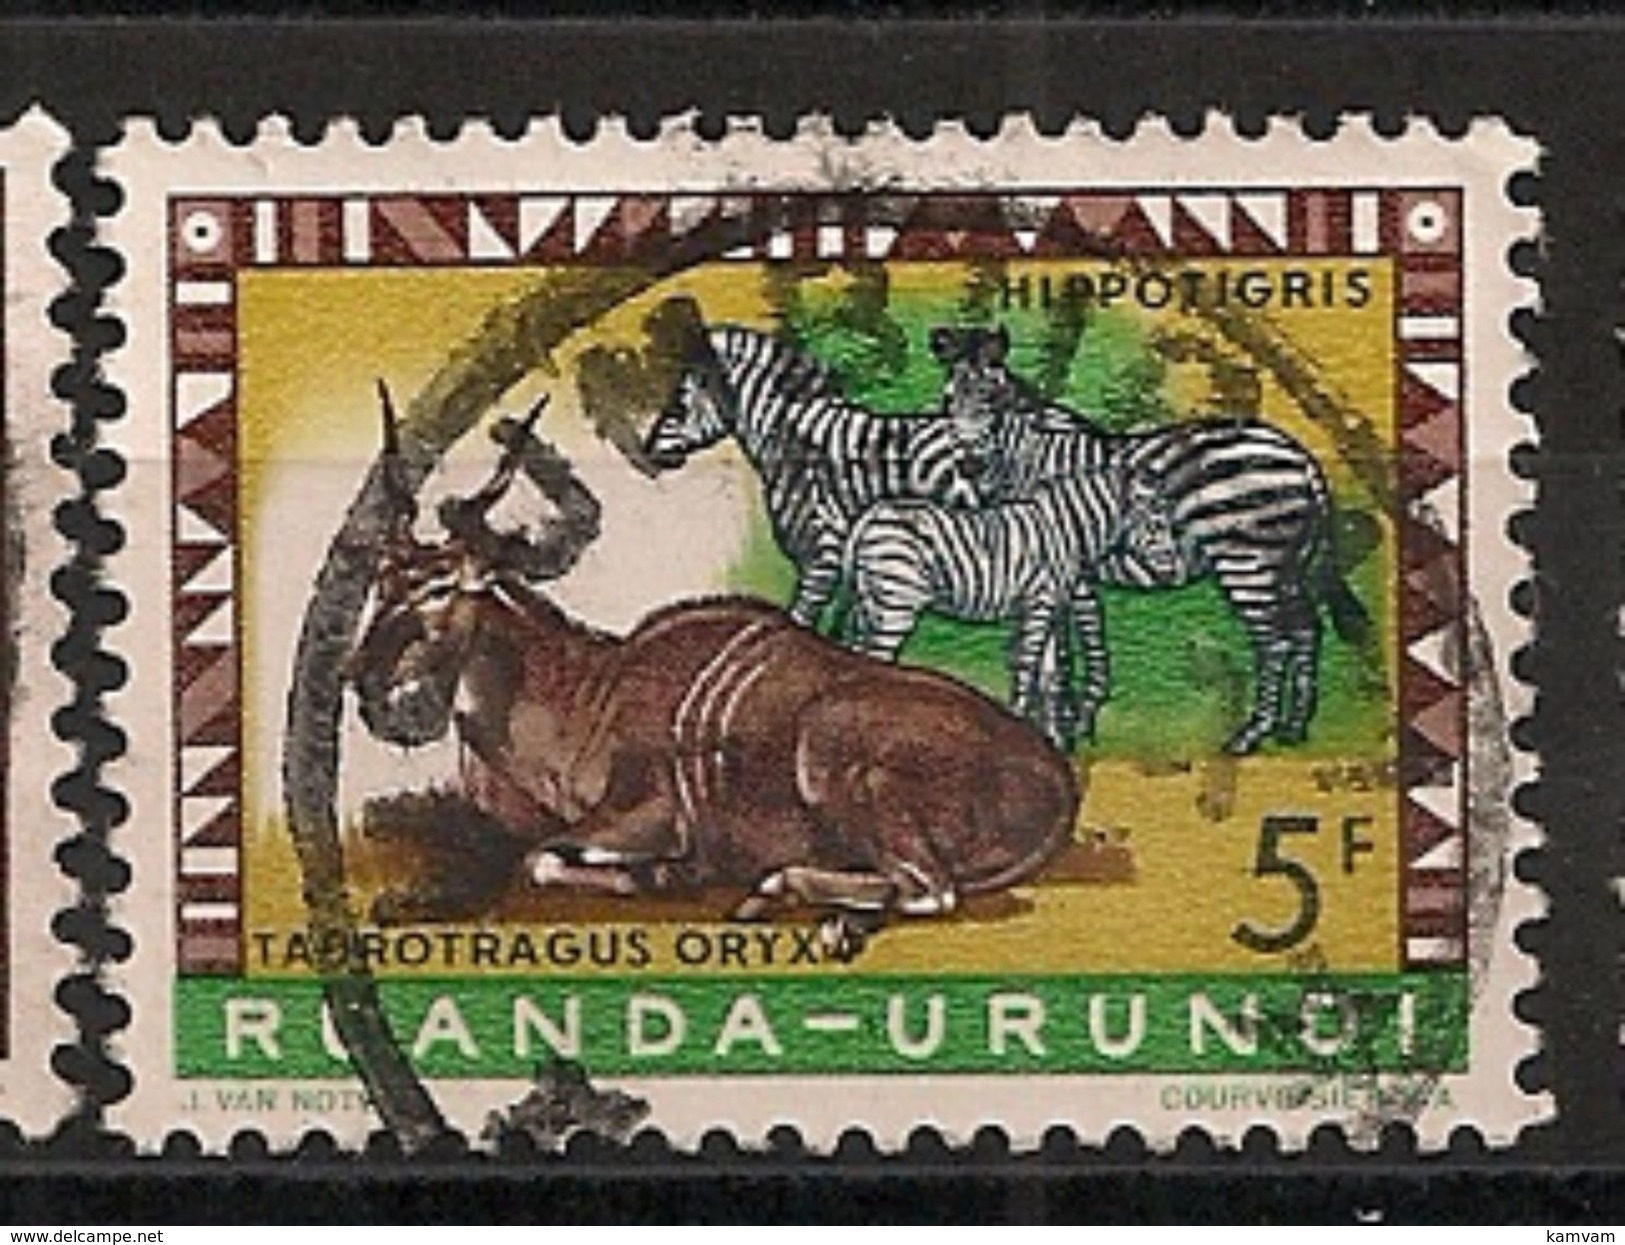 CONGO RUANDA URUNDI 213 USUMBURA - Used Stamps